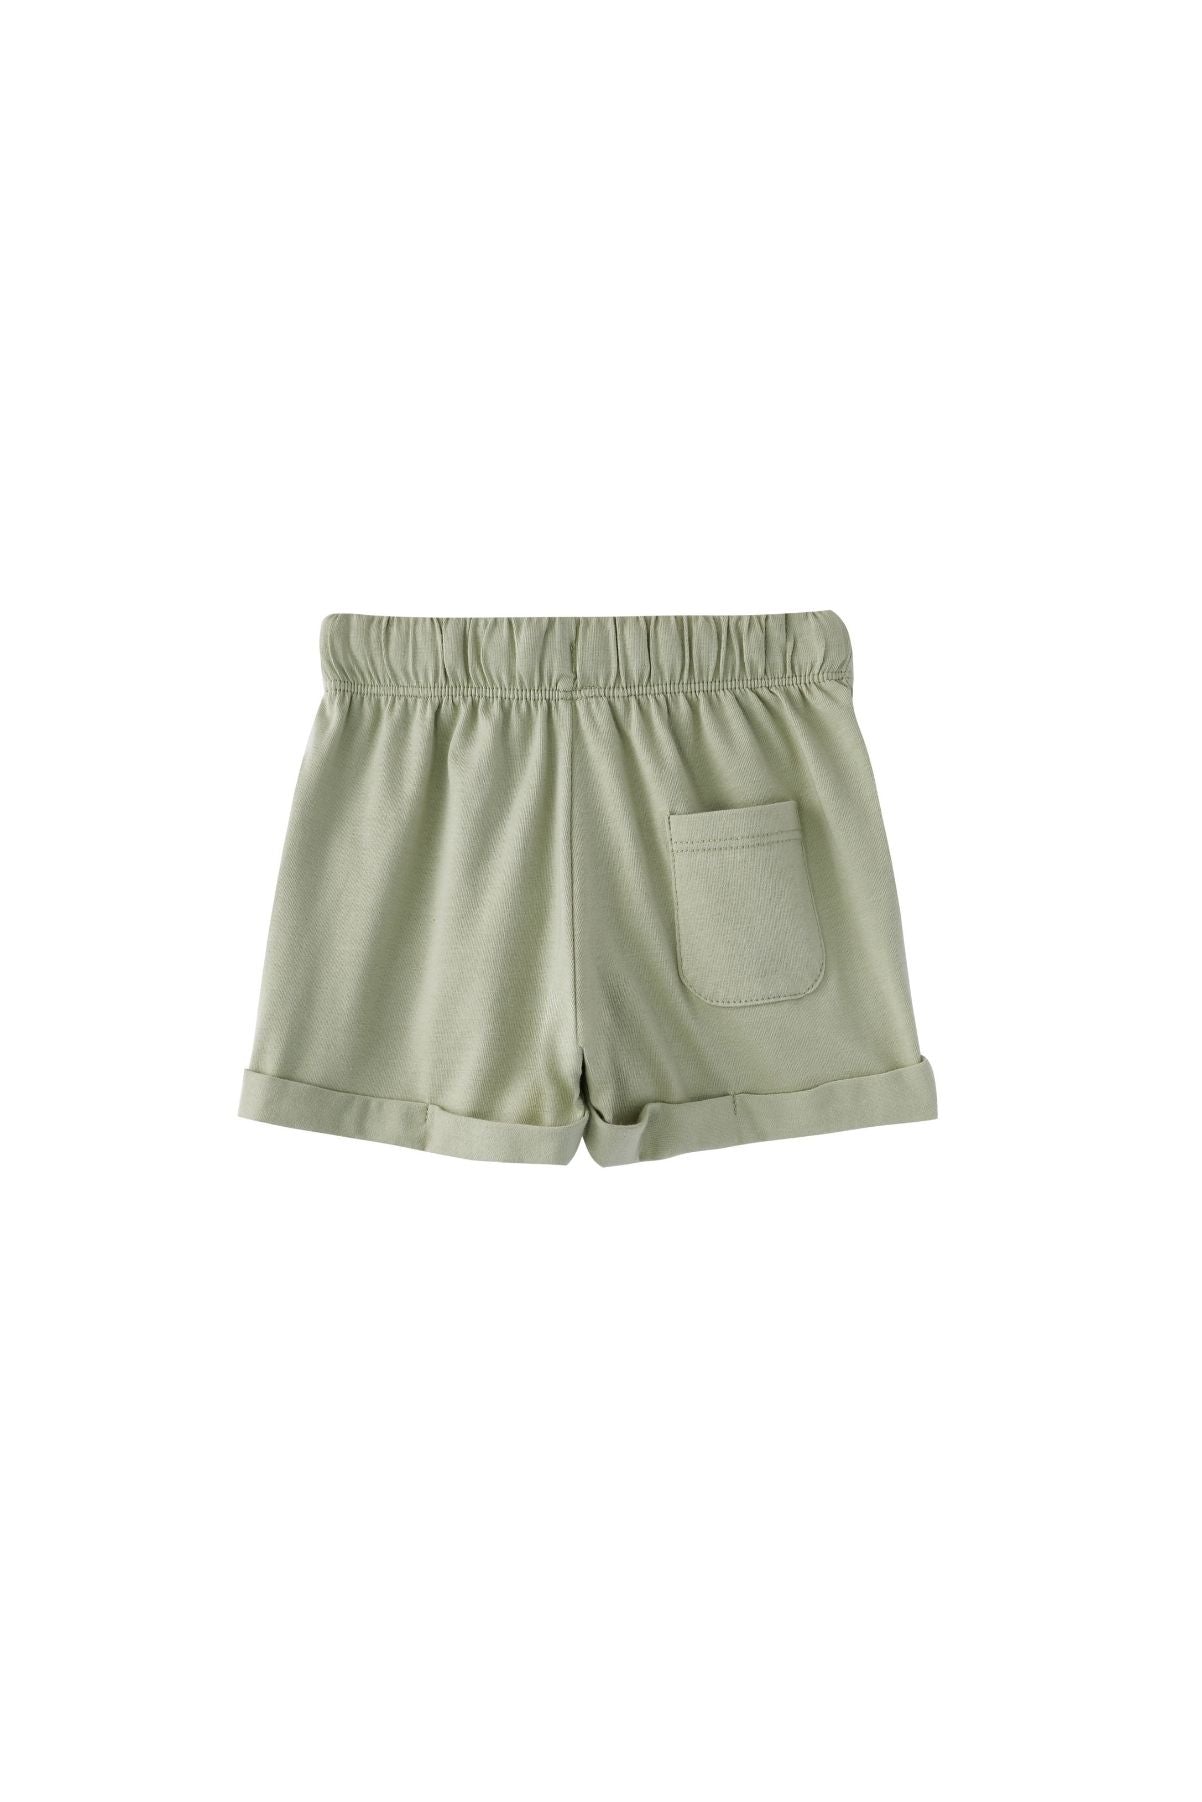 back of Organic Essential Shorts-Grey Green